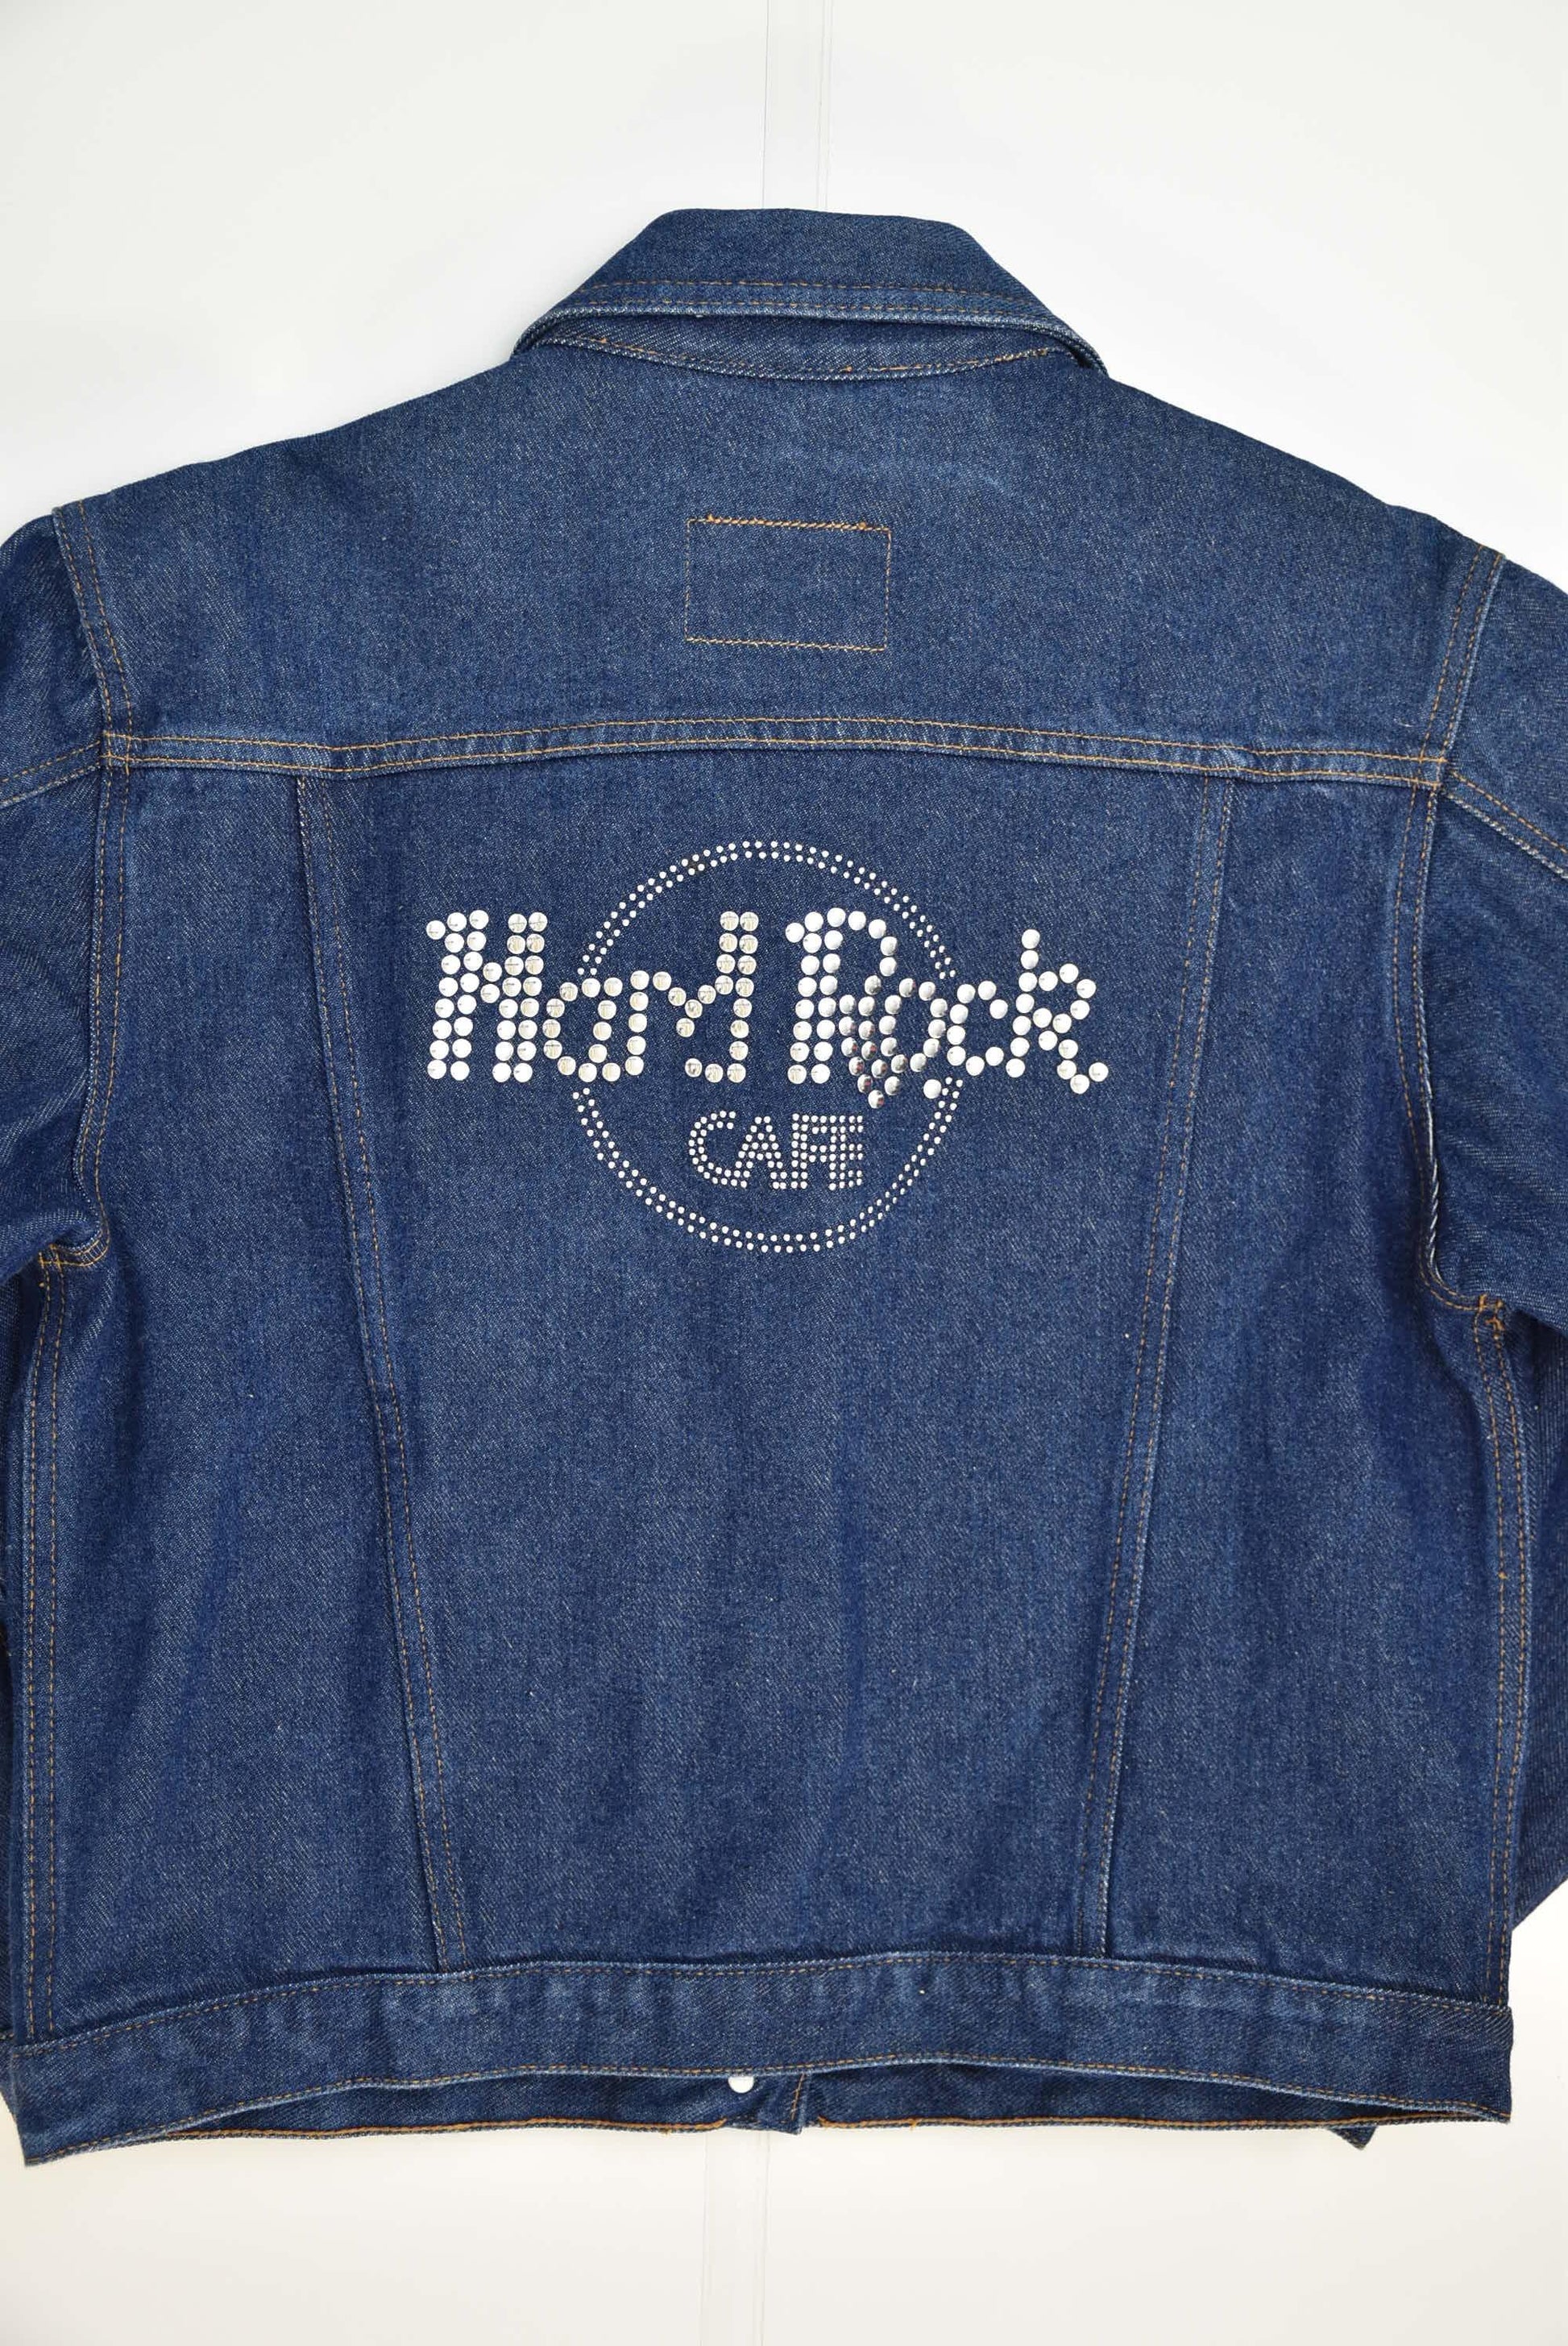 Hard Rock Cafe Denim Jacket (S) - Slayyy Vintage